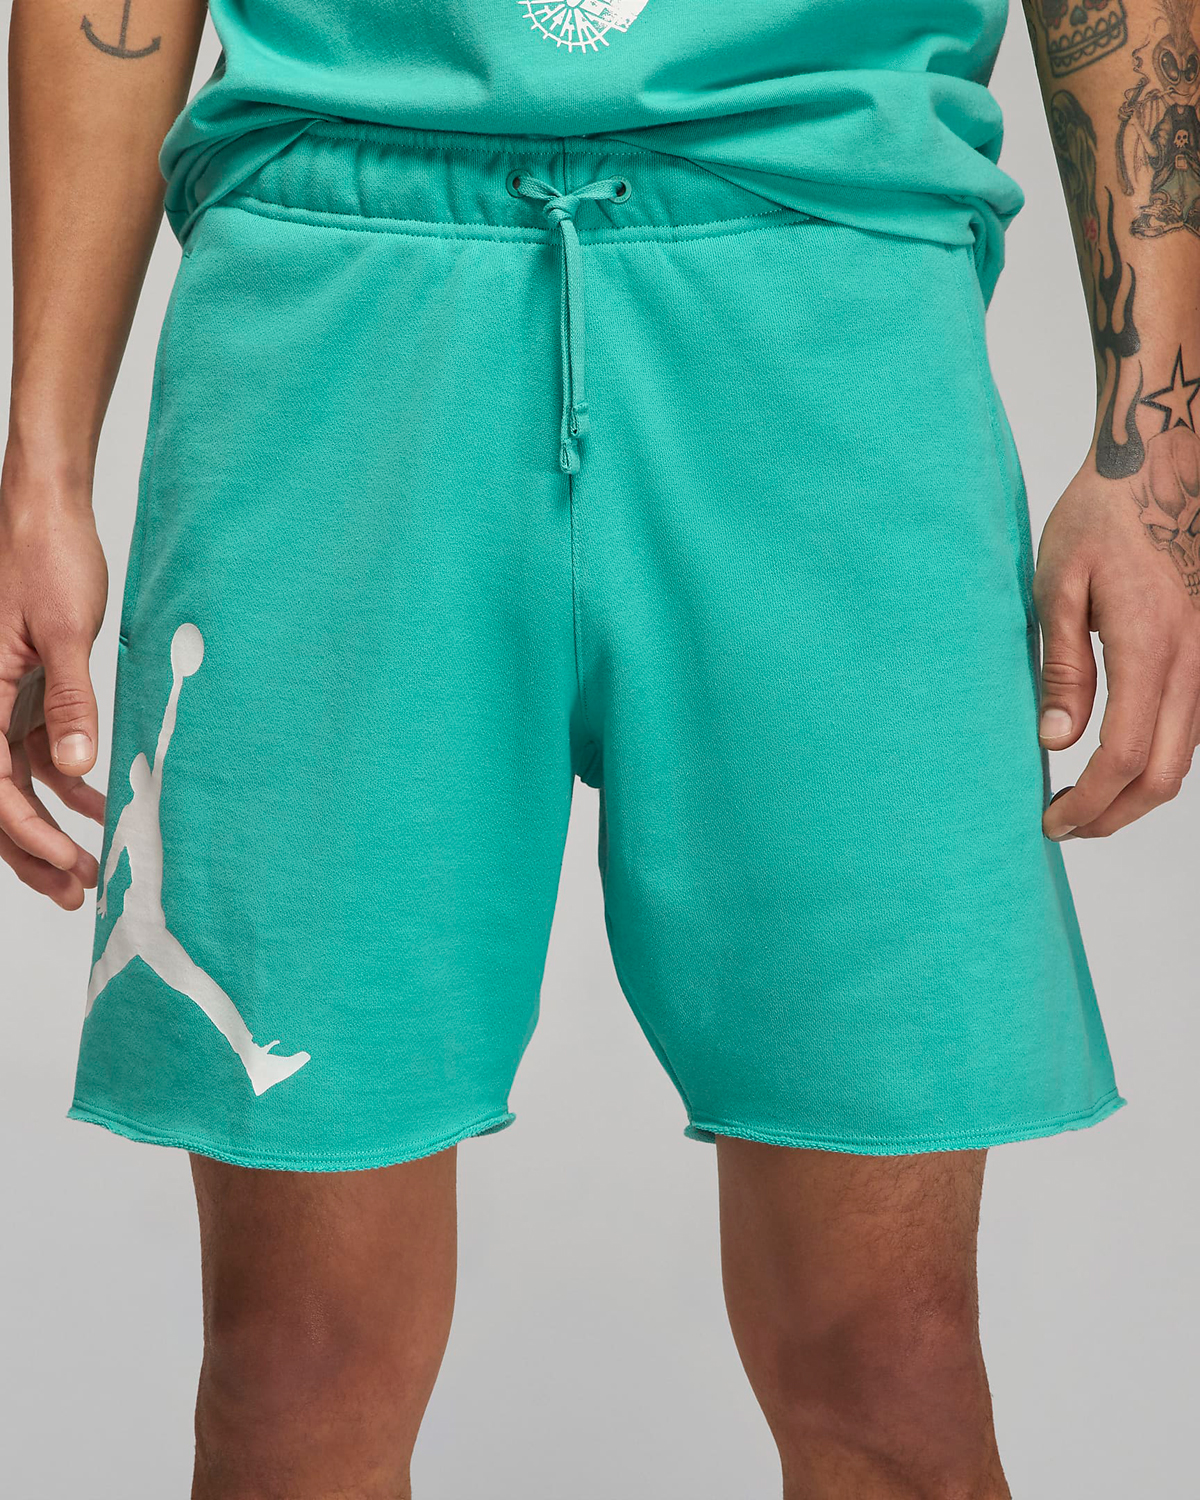 Jordan-Jumpman-Shorts-Teal-Turquoise-Green